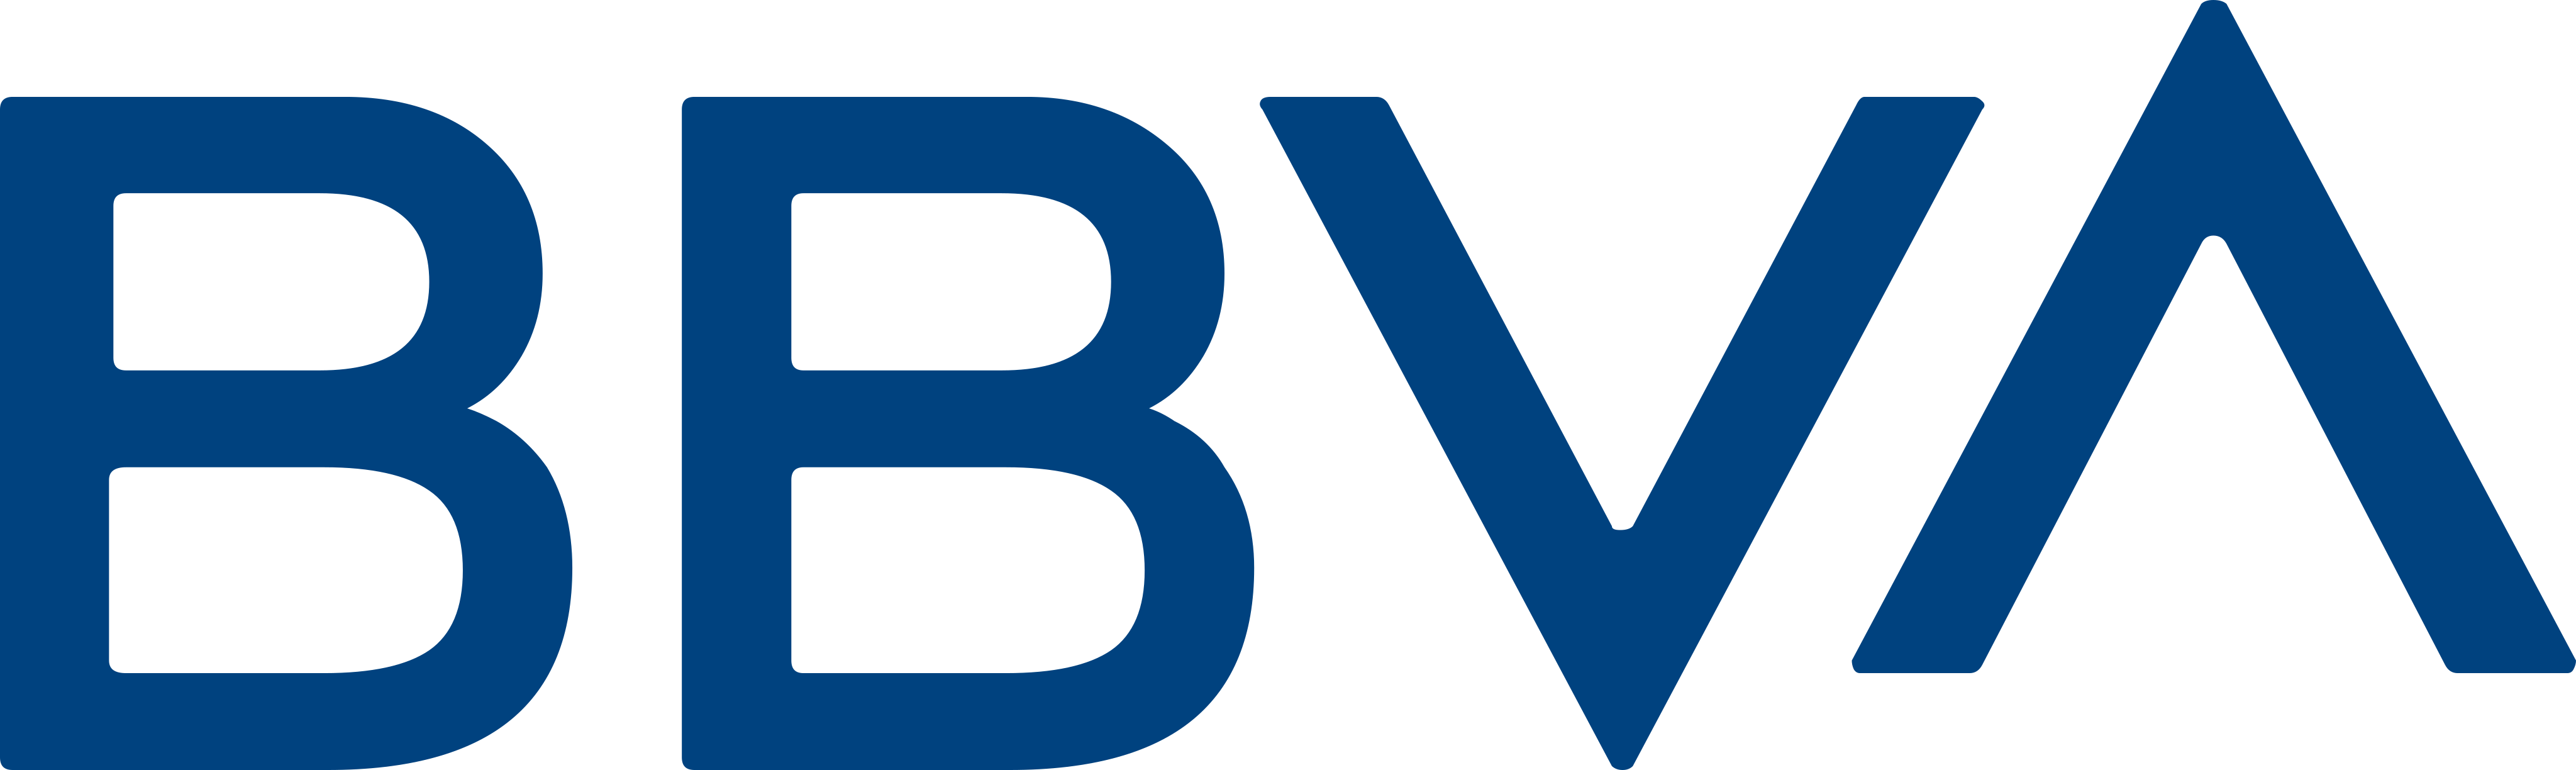 bbva logo 16 - BBVA Logo